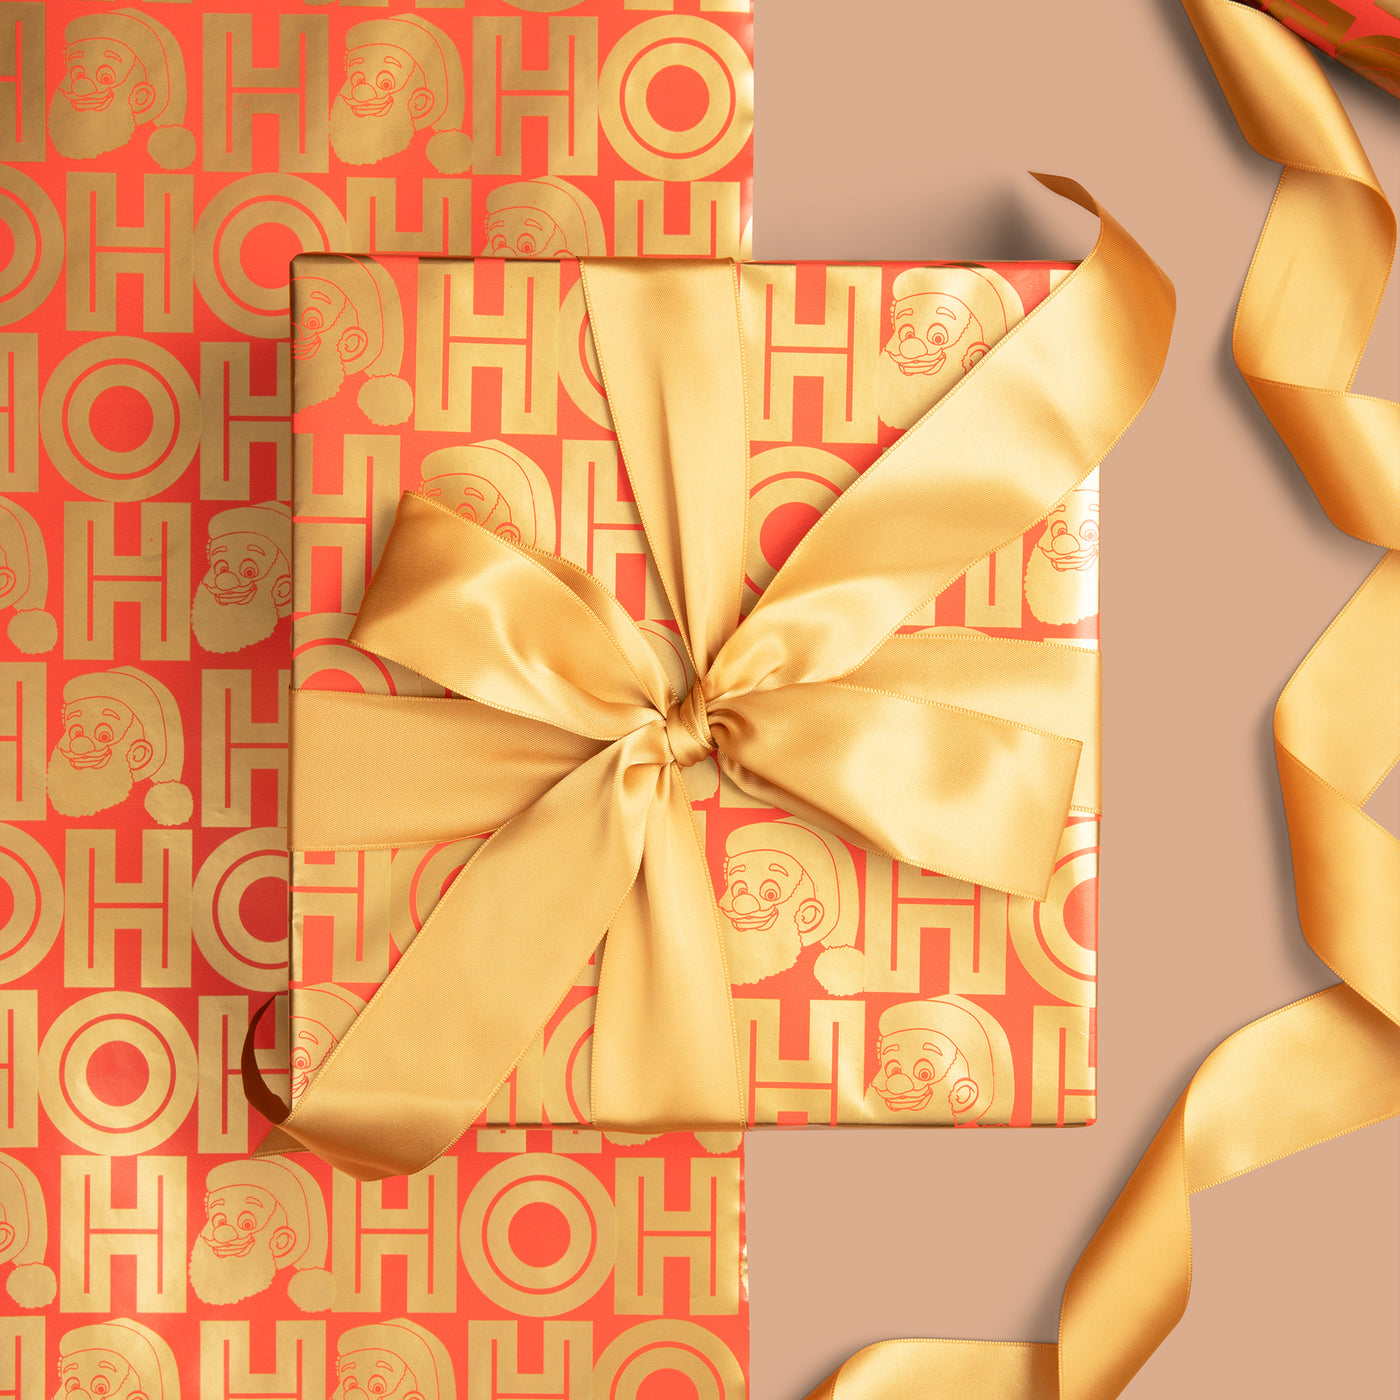 Clarence Claus™ HOHOHO Gift Wrap